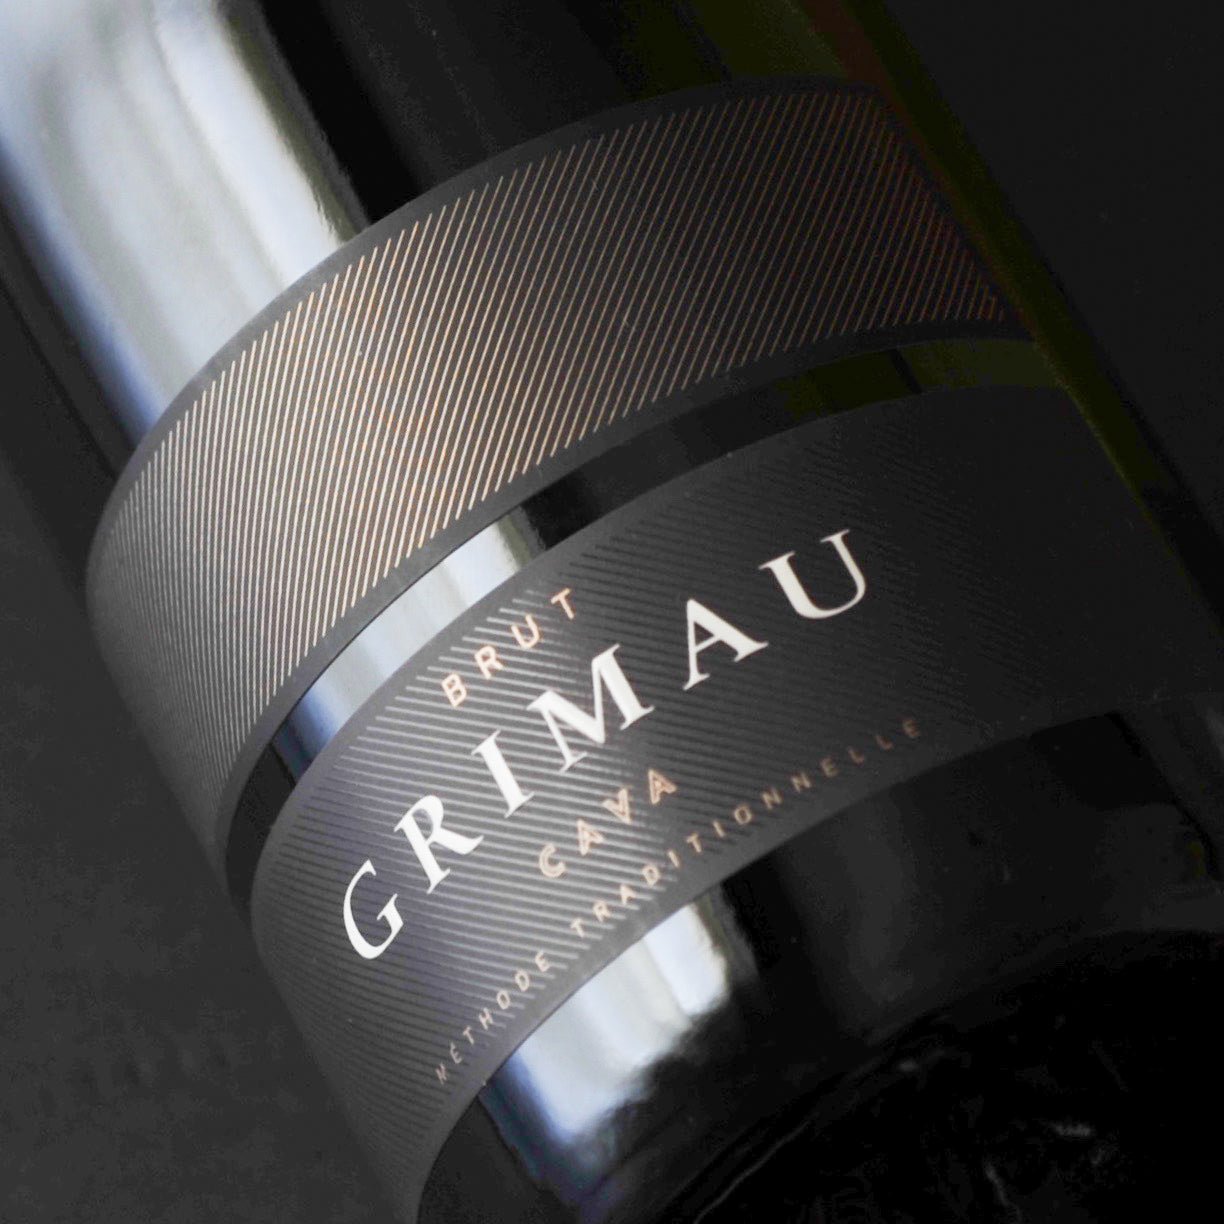 Spanish Sparkling Wine Grimau Brut from Grimau